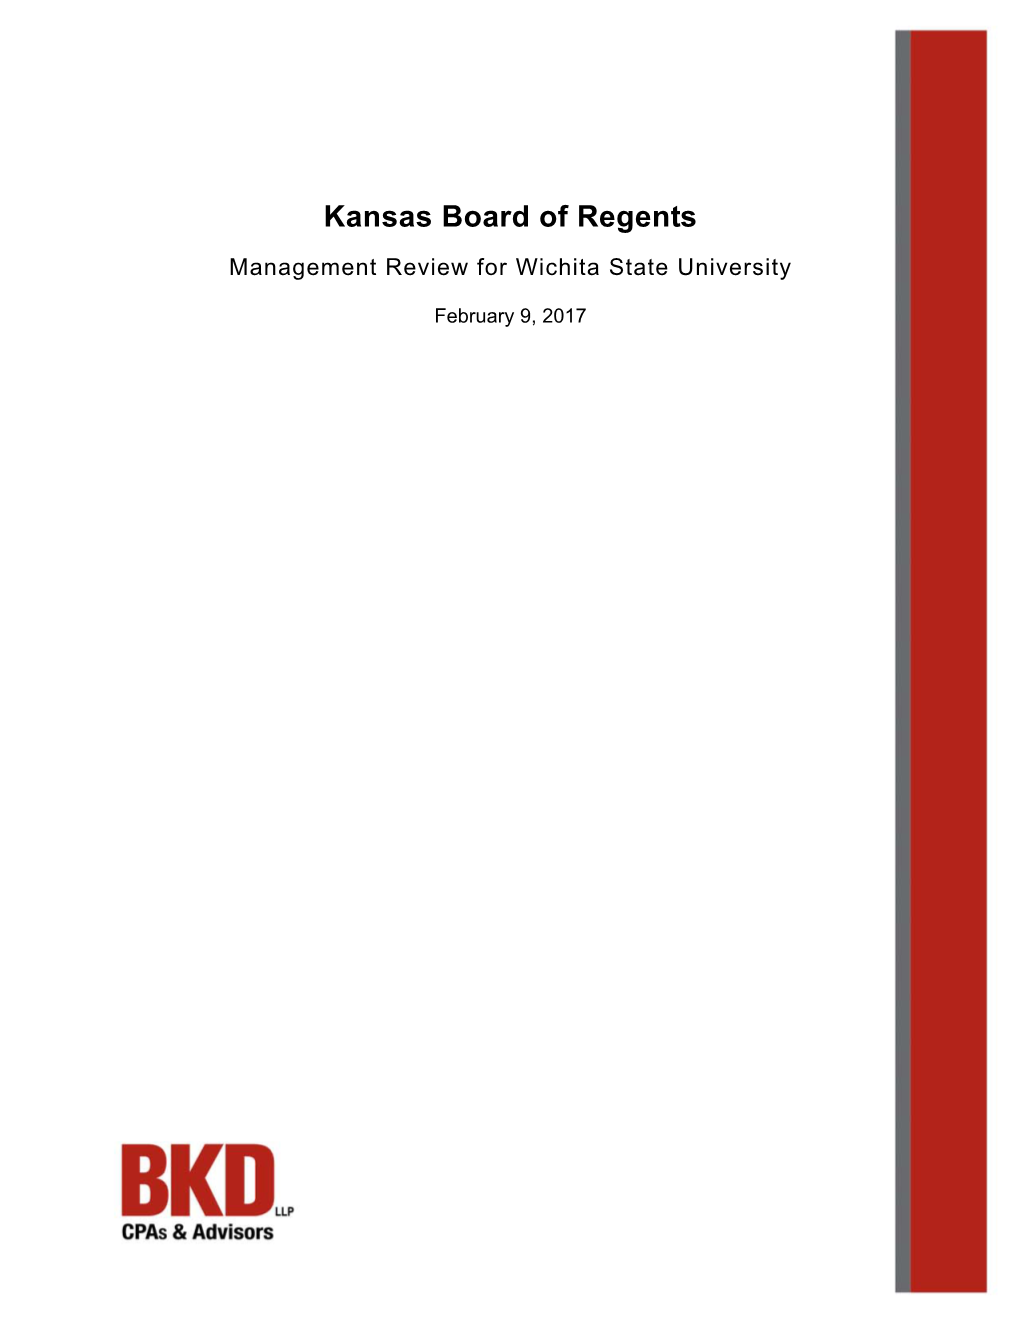 Wichita State University External Management Review